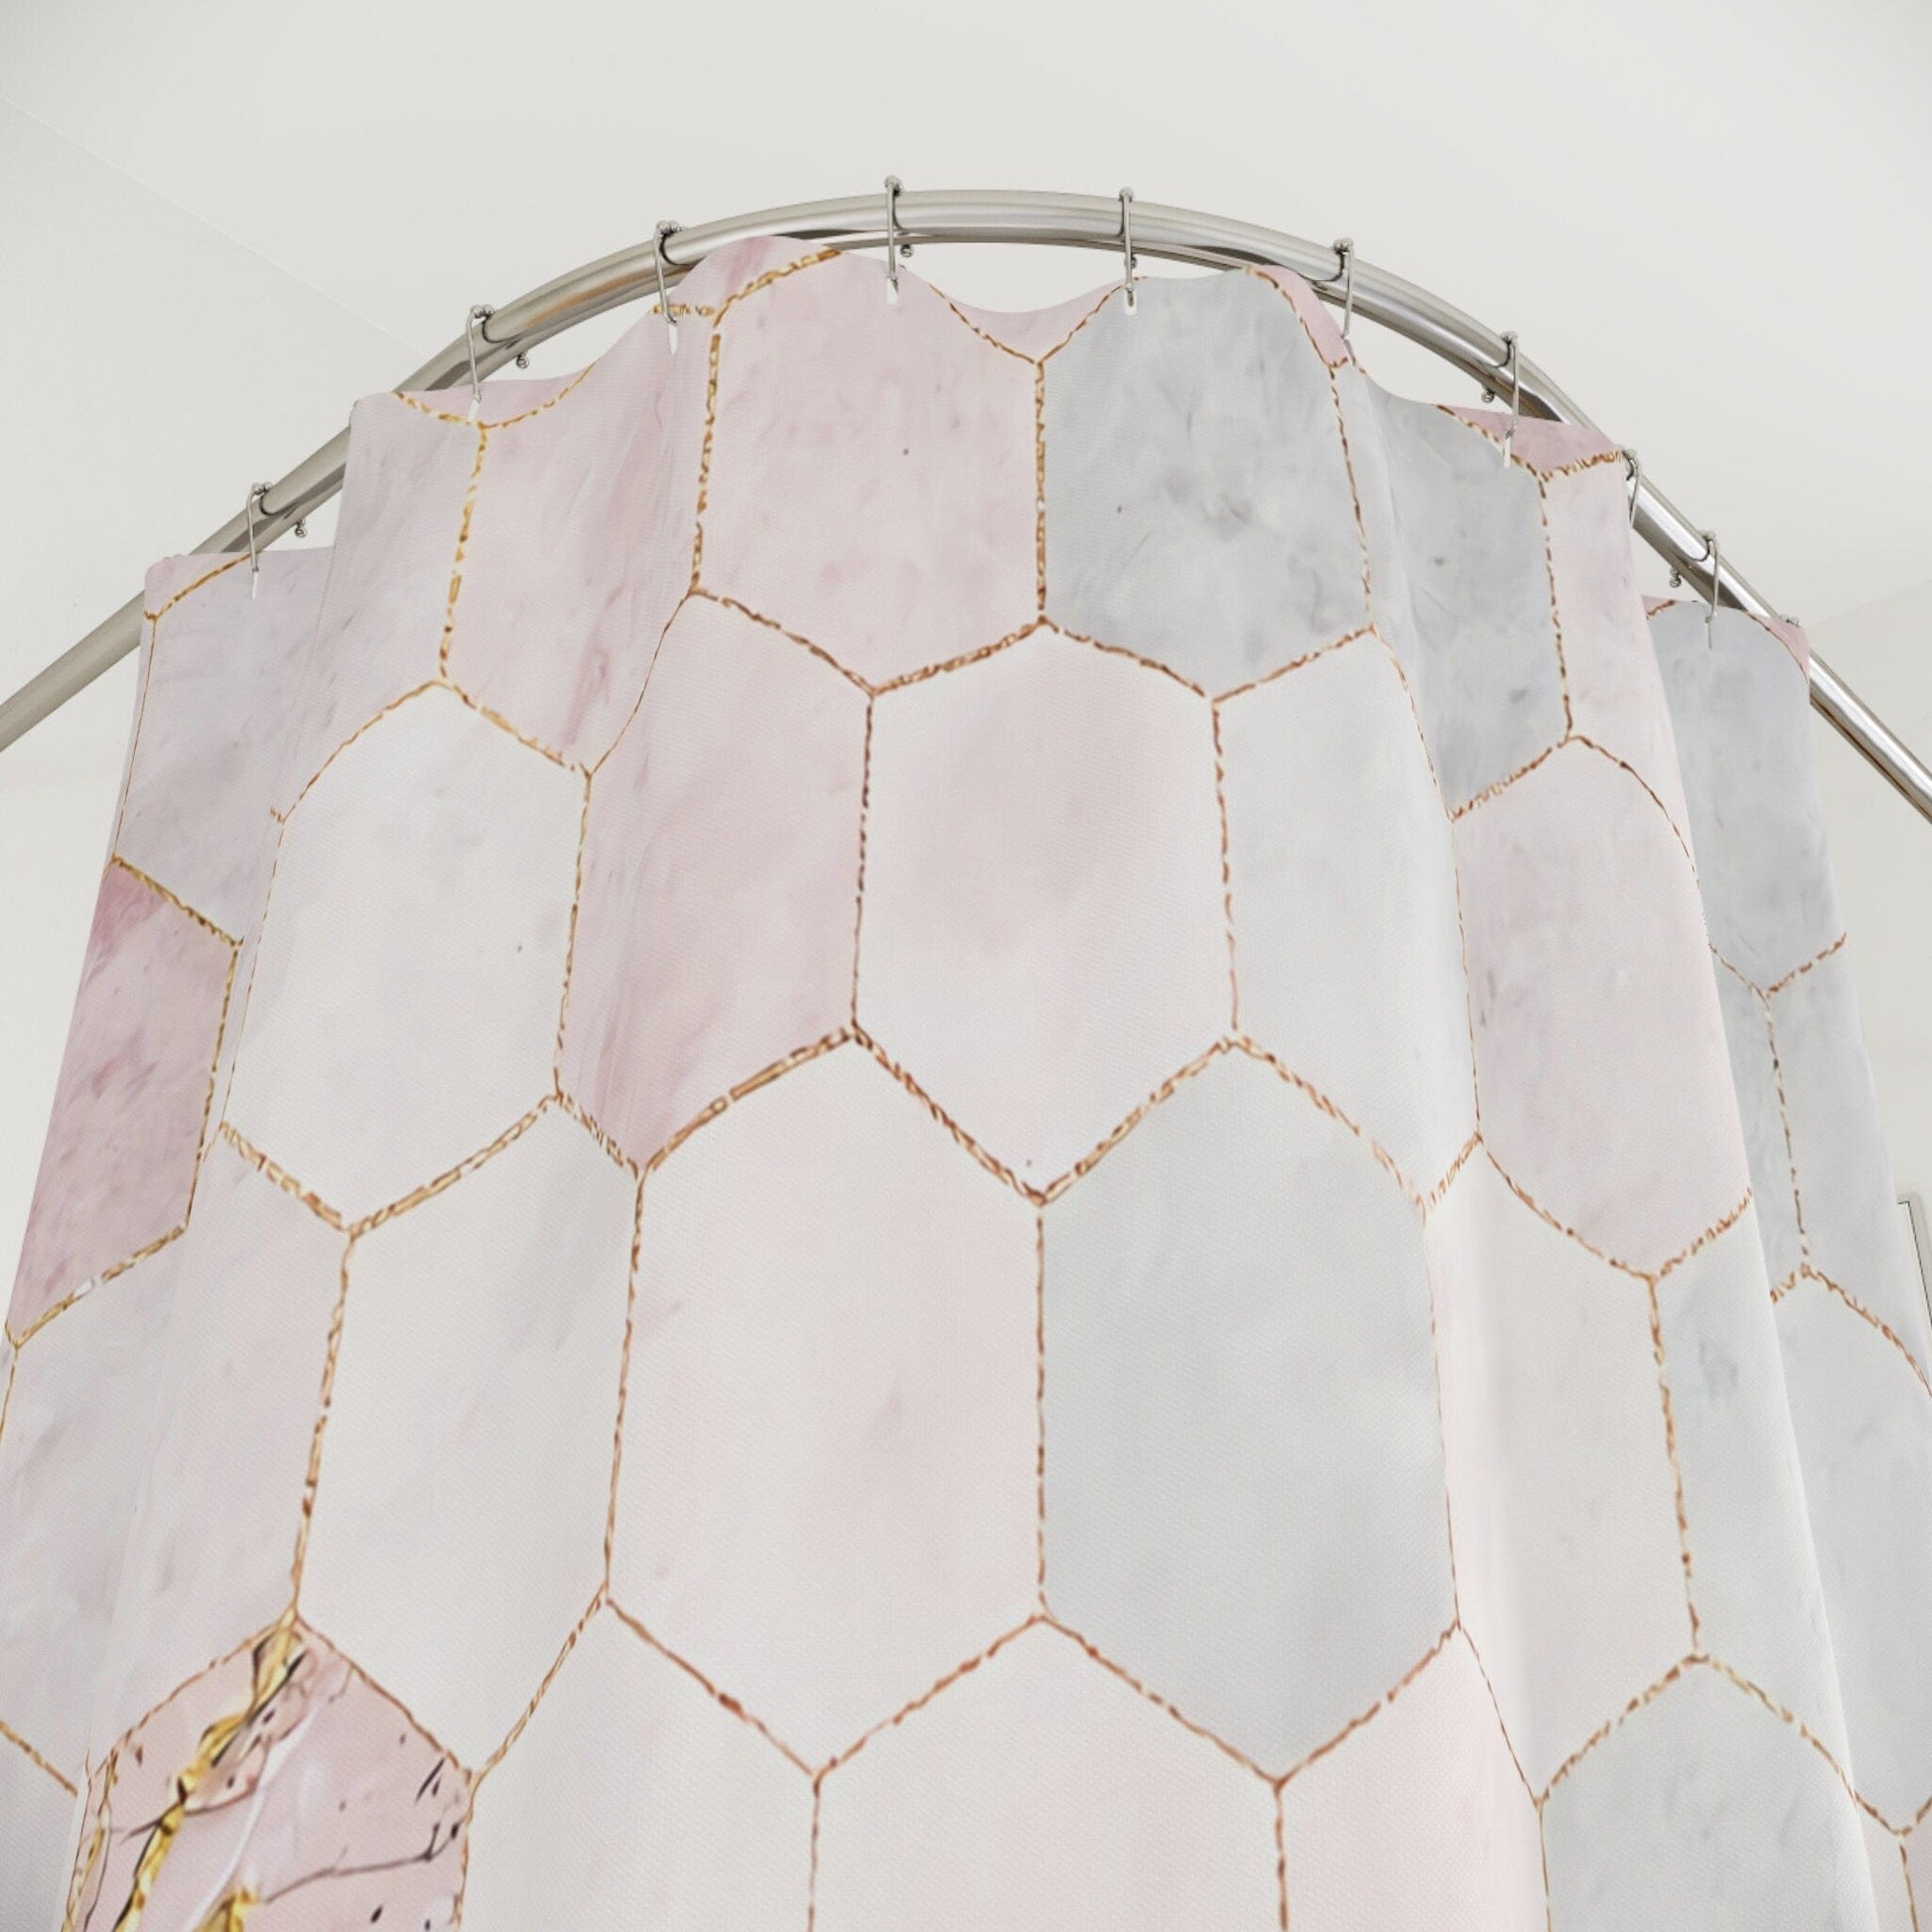 Kate McEnroe New York Modern Geometric Tiles Marble Print Shower Curtain, Stylish Bathroom Decor, Pink, Grey, Light Blue Marble Bath Curtains, Contemporary Bath Shower Curtains